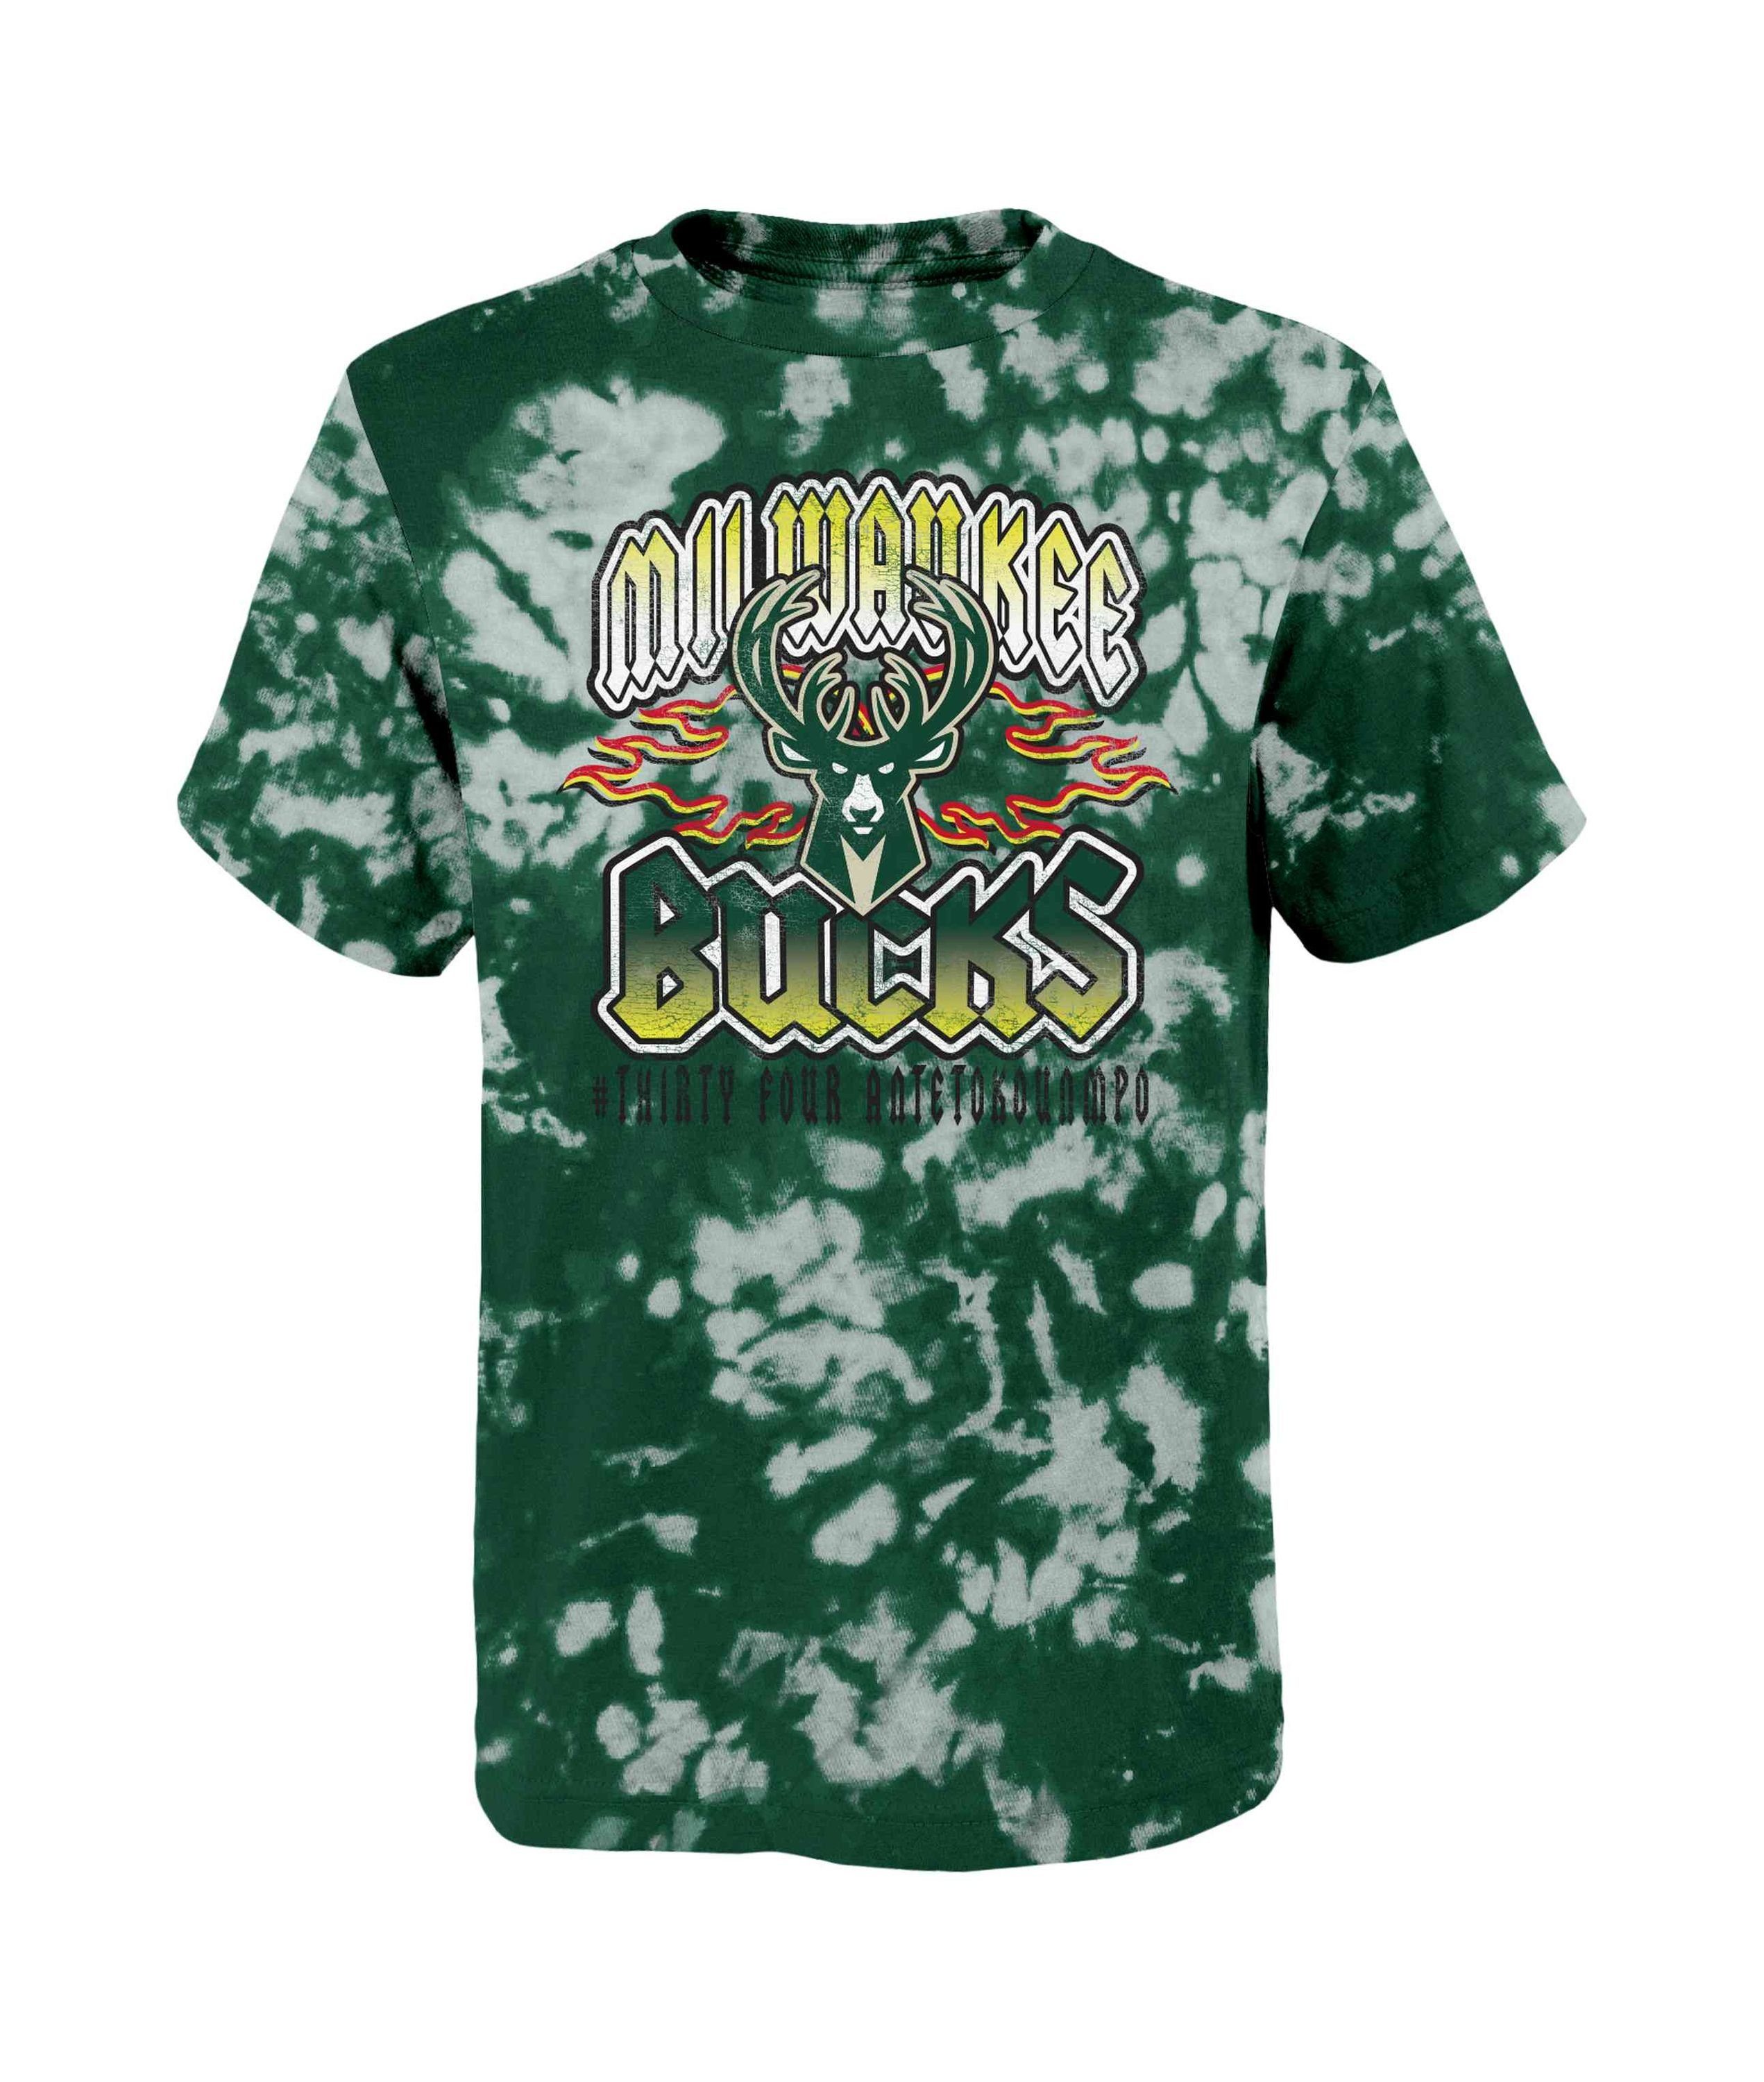 T-Shirt Antetokounmpo Milwaukee of NBA Outerstuff School Bucks Rock